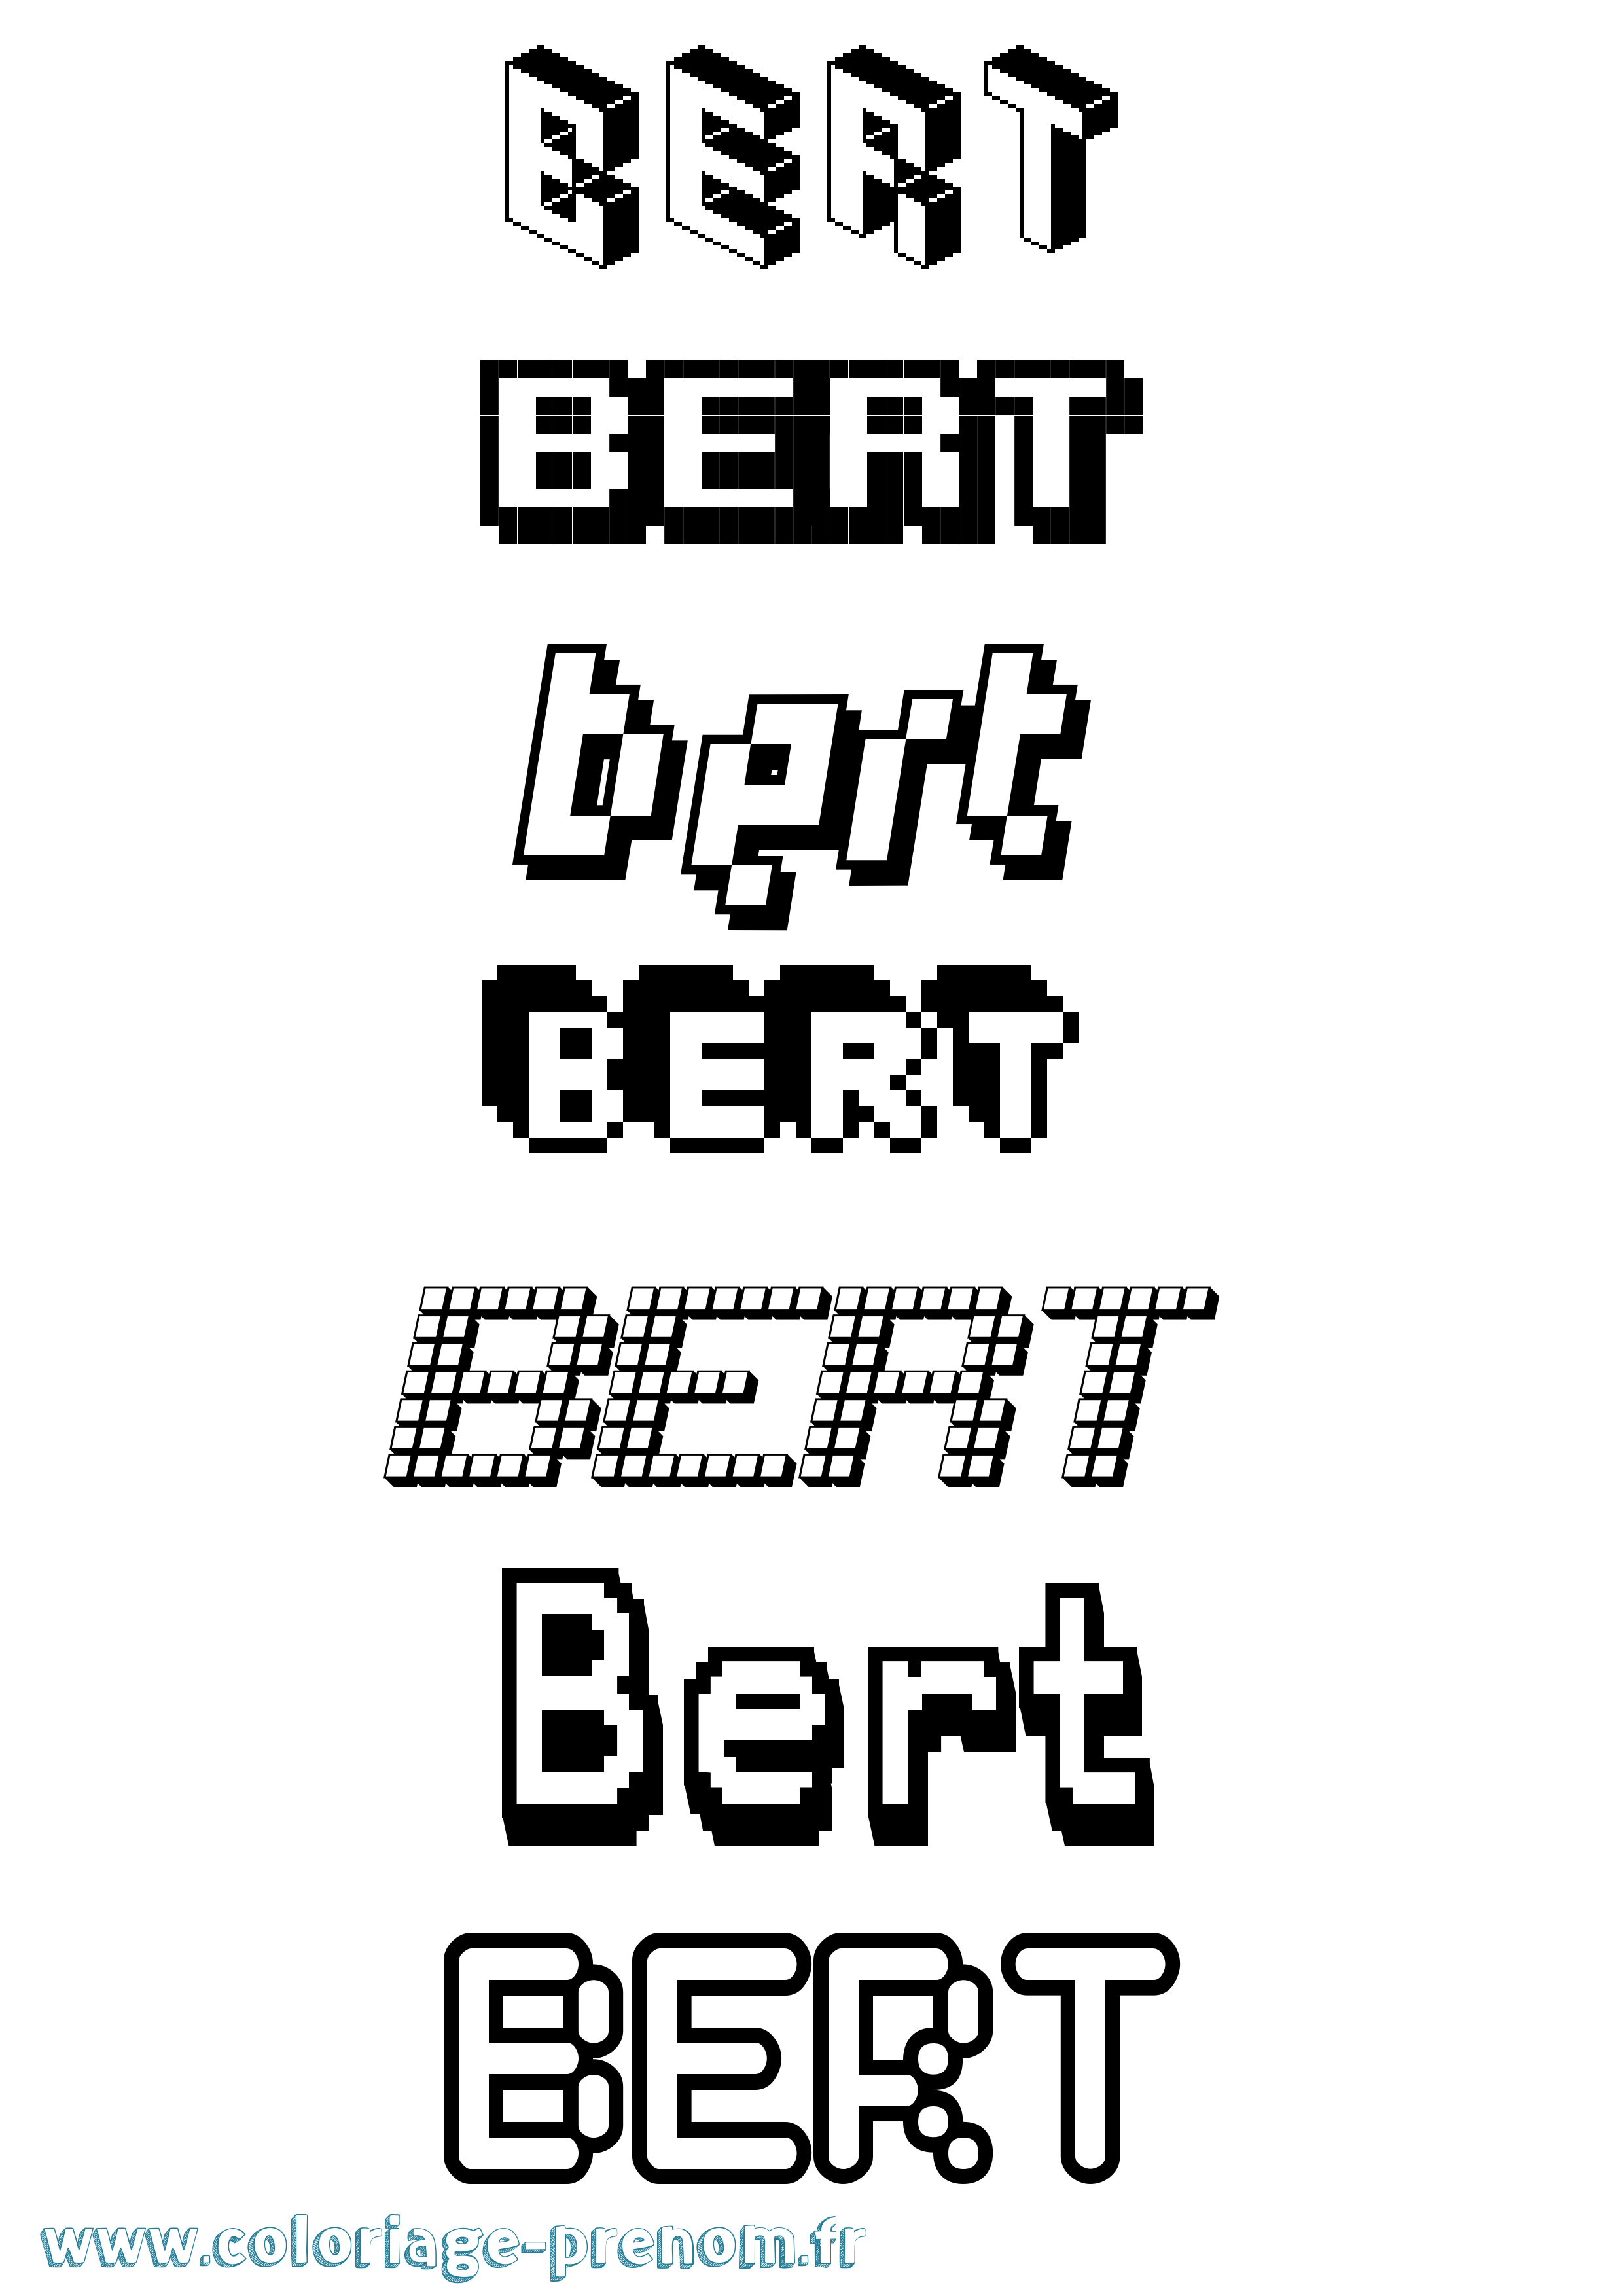 Coloriage prénom Bert Pixel